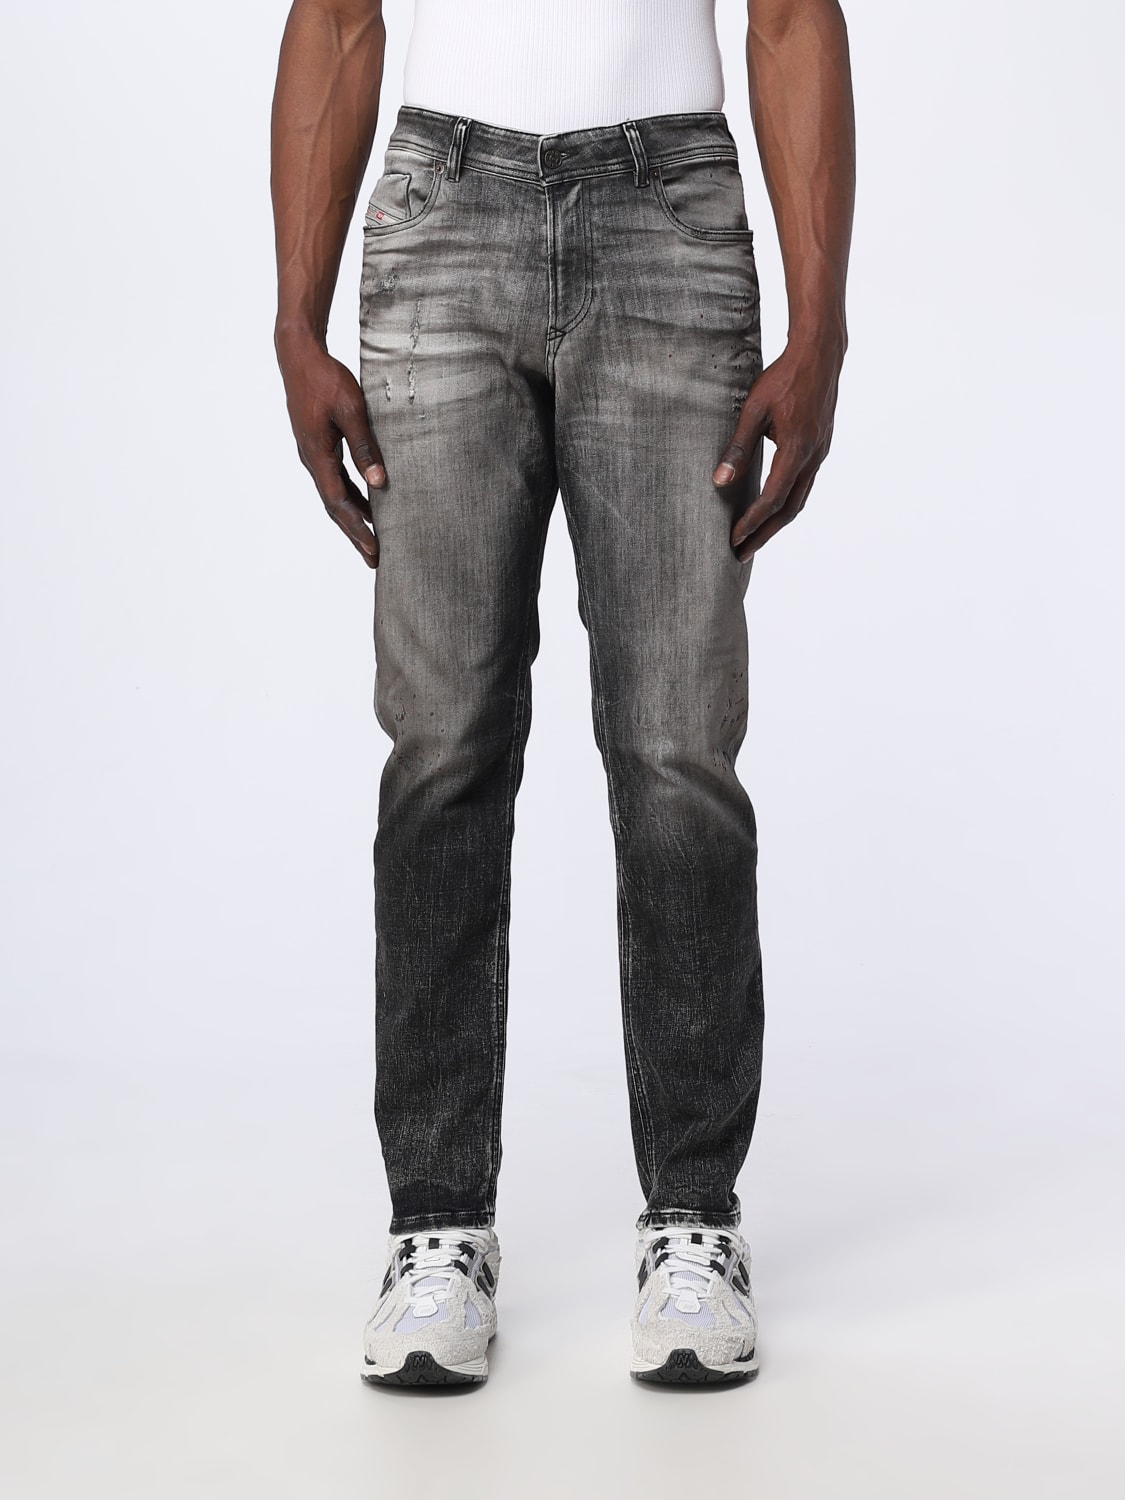 Diesel Outlet: jeans stretch denim - Black | Diesel jeans online at GIGLIO.COM